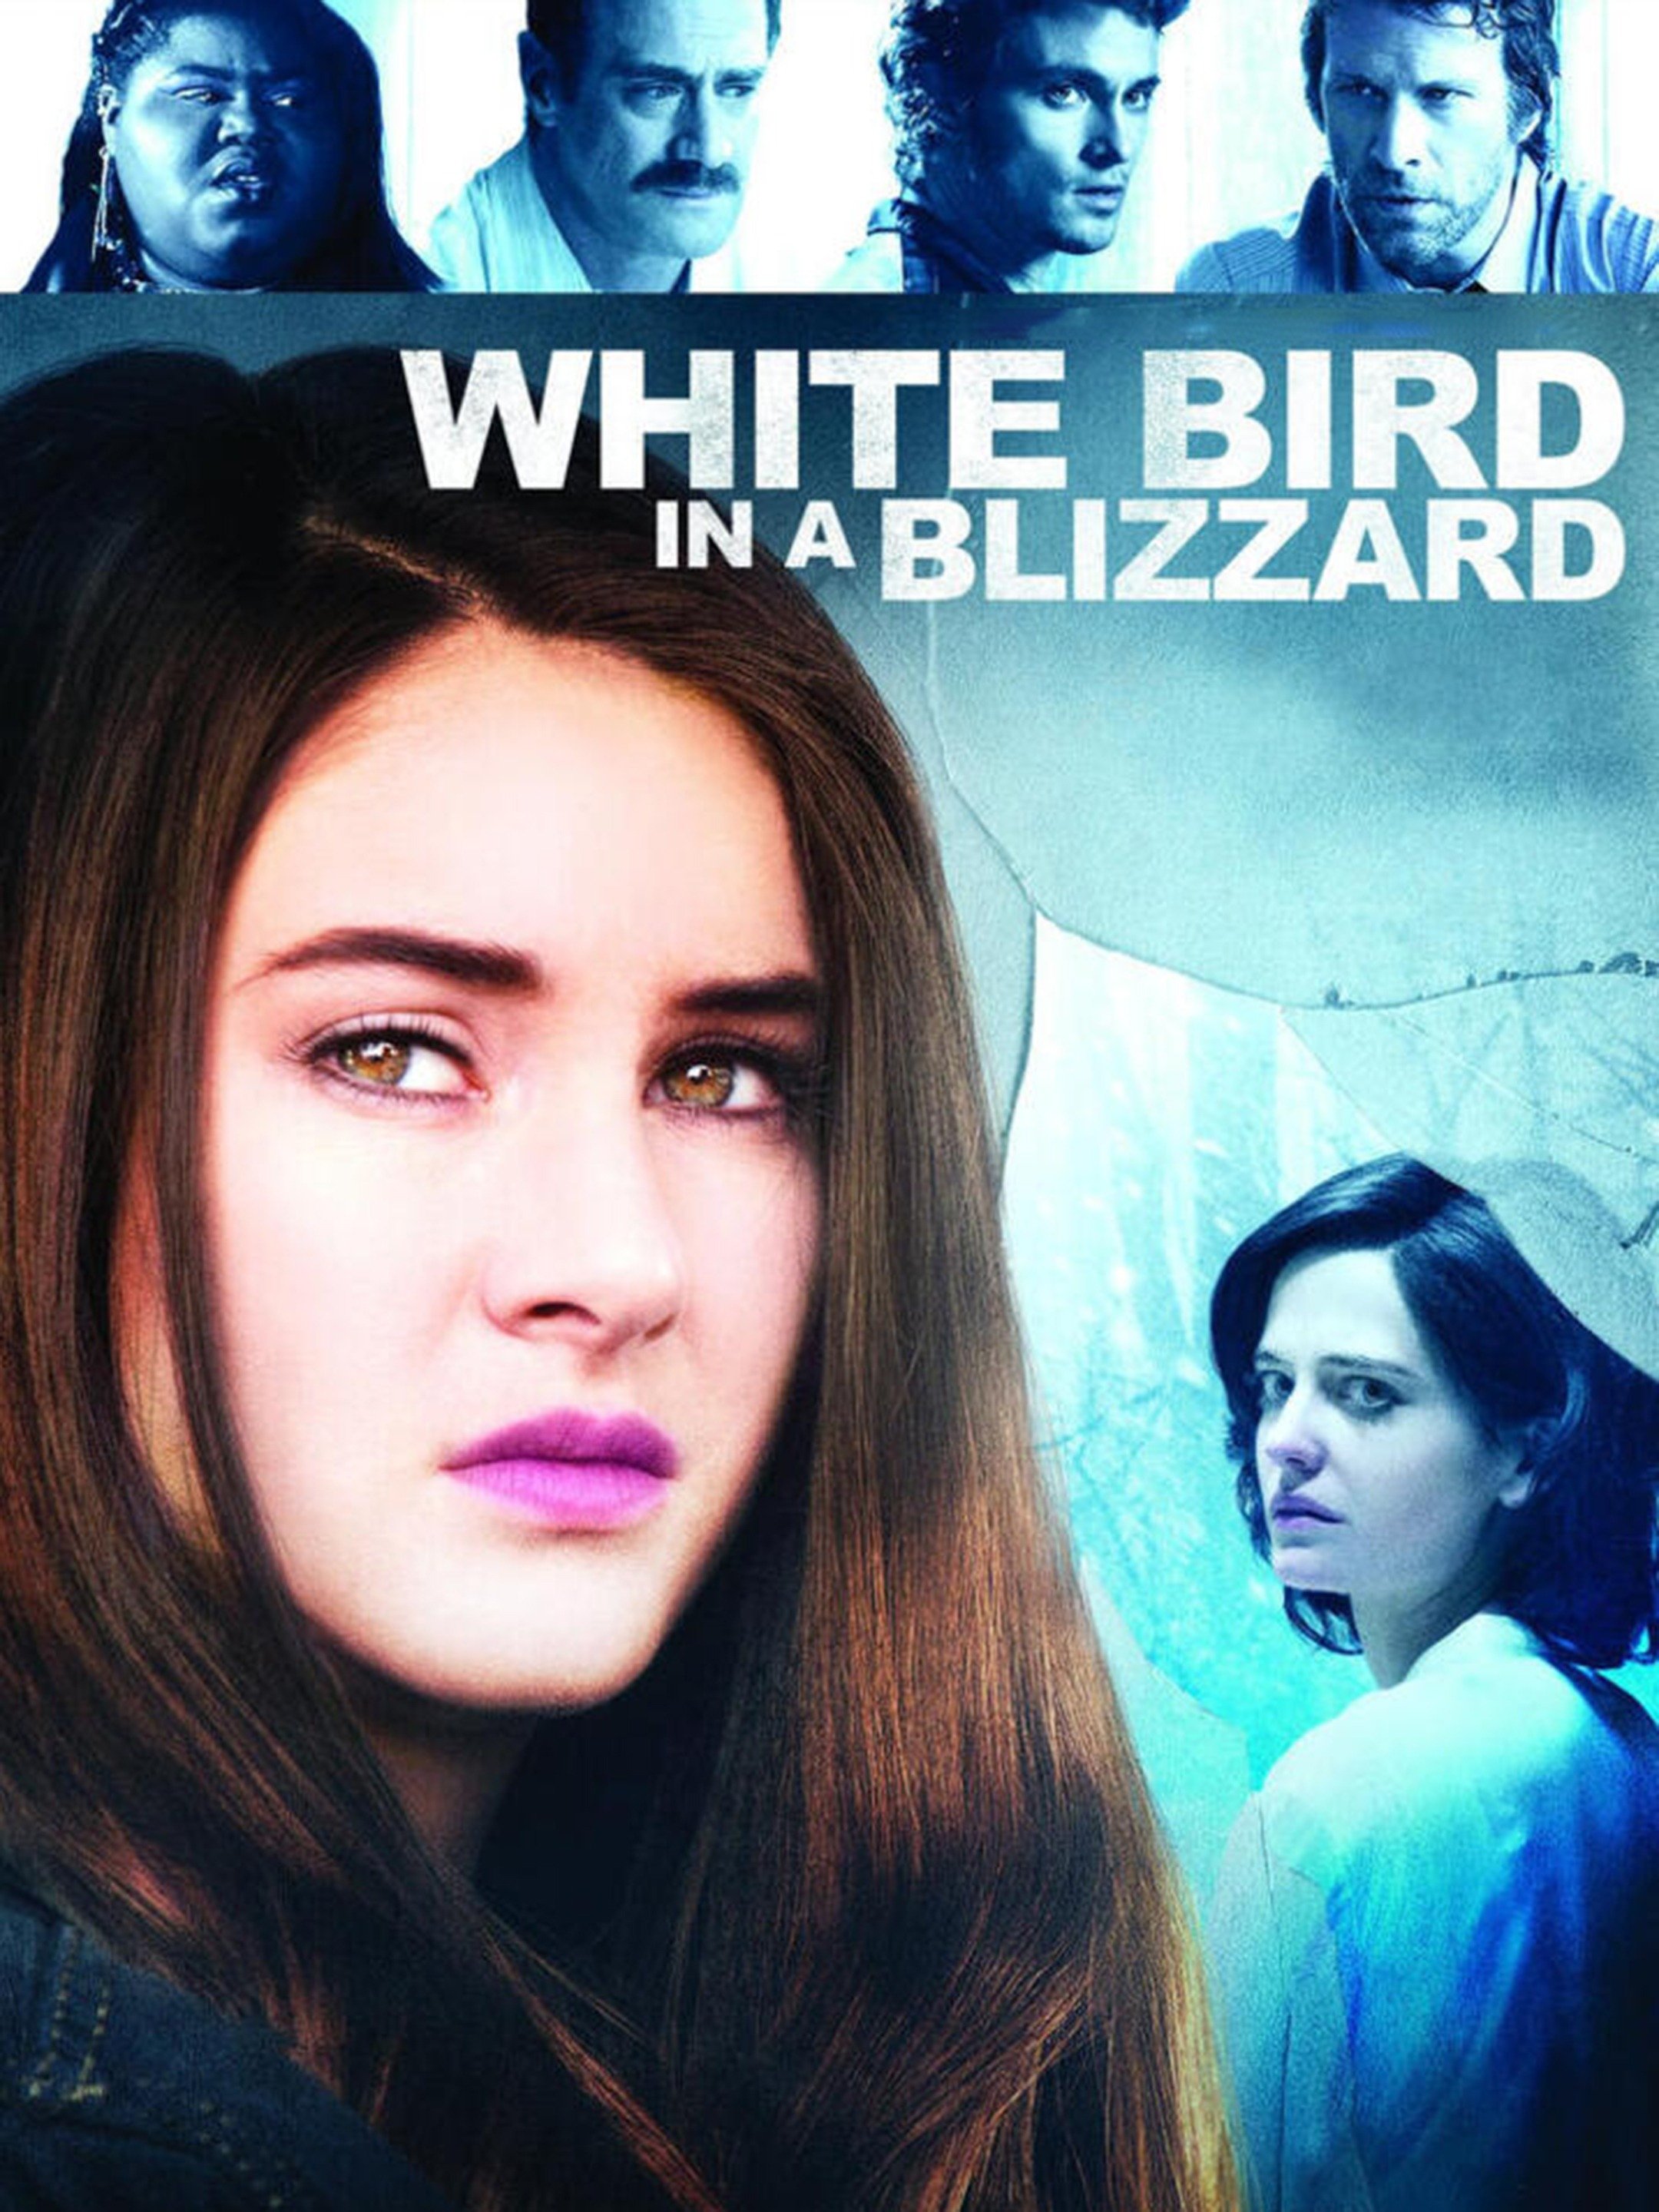 White Bird in a Blizzard Movie Reviews